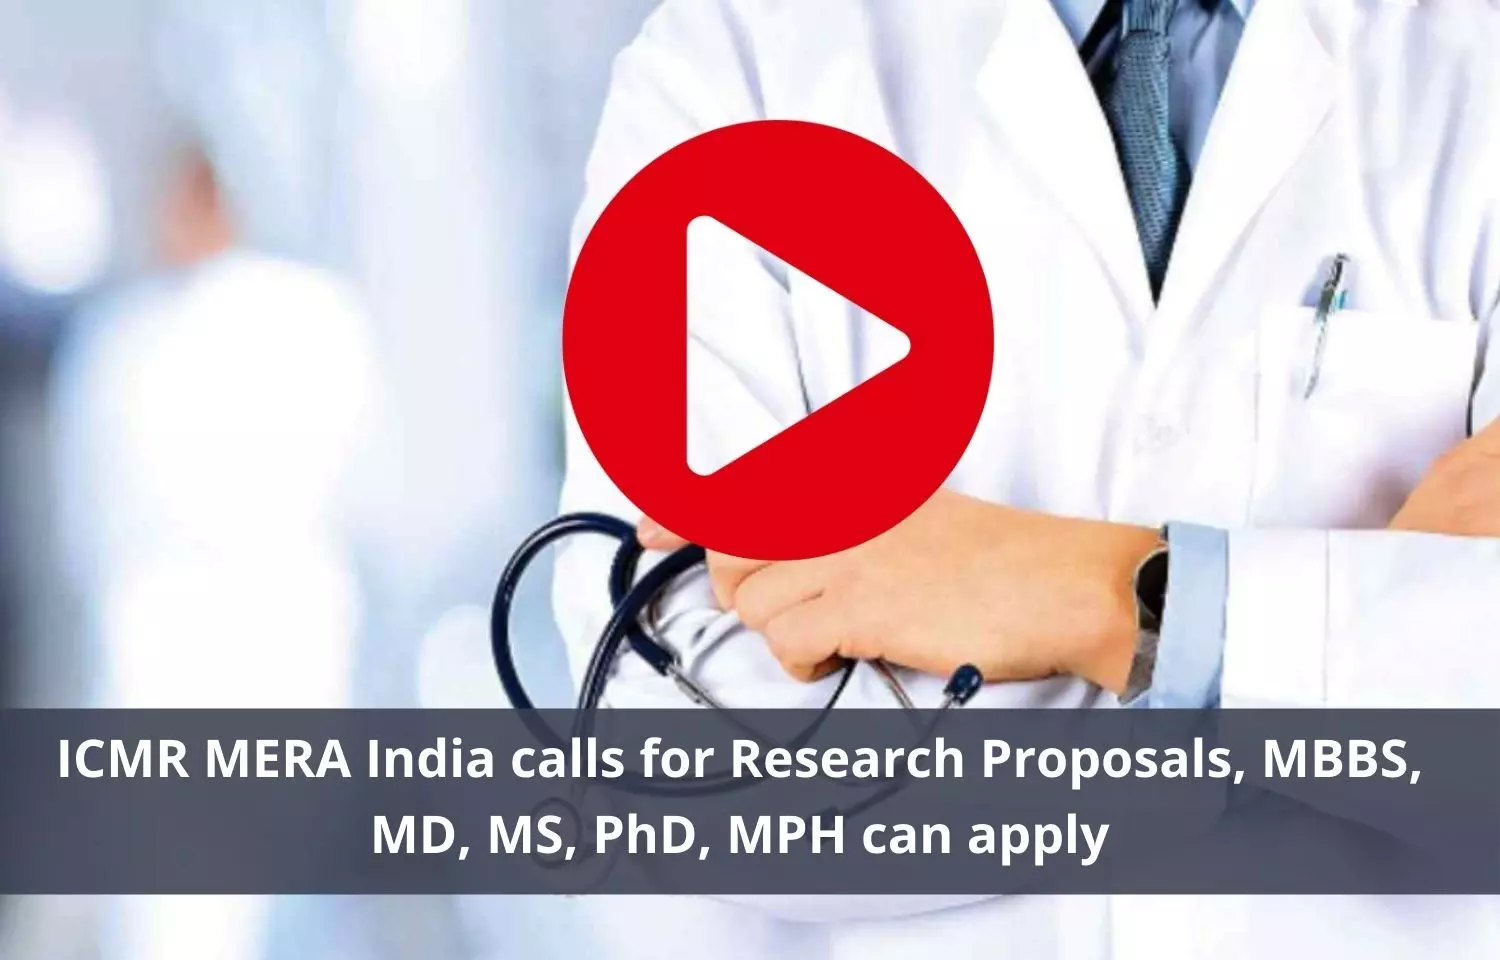 Invitation for ICMR MERA research proposals for Malaria Research